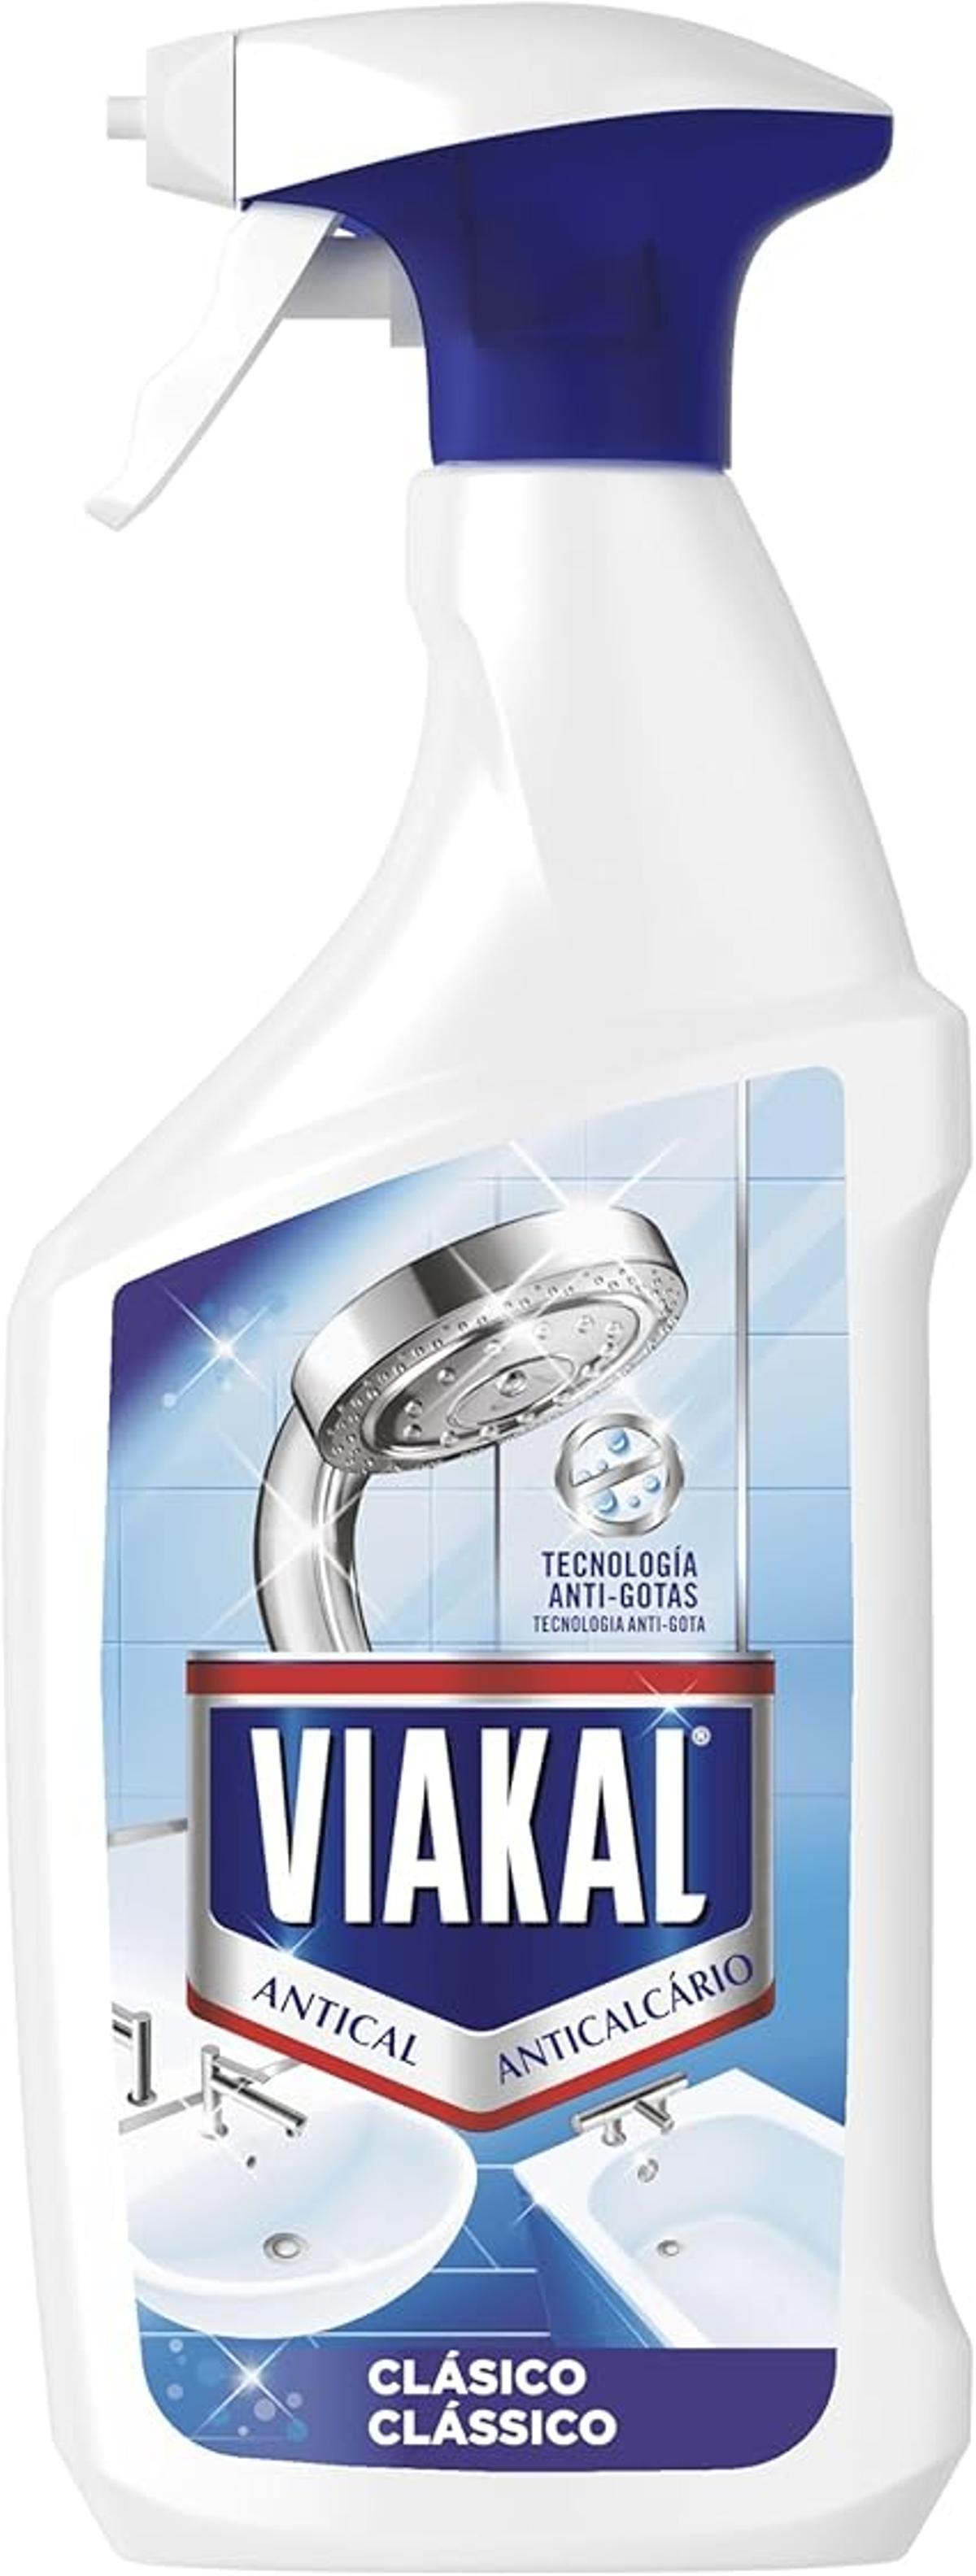 Detergente Viakal para la ducha